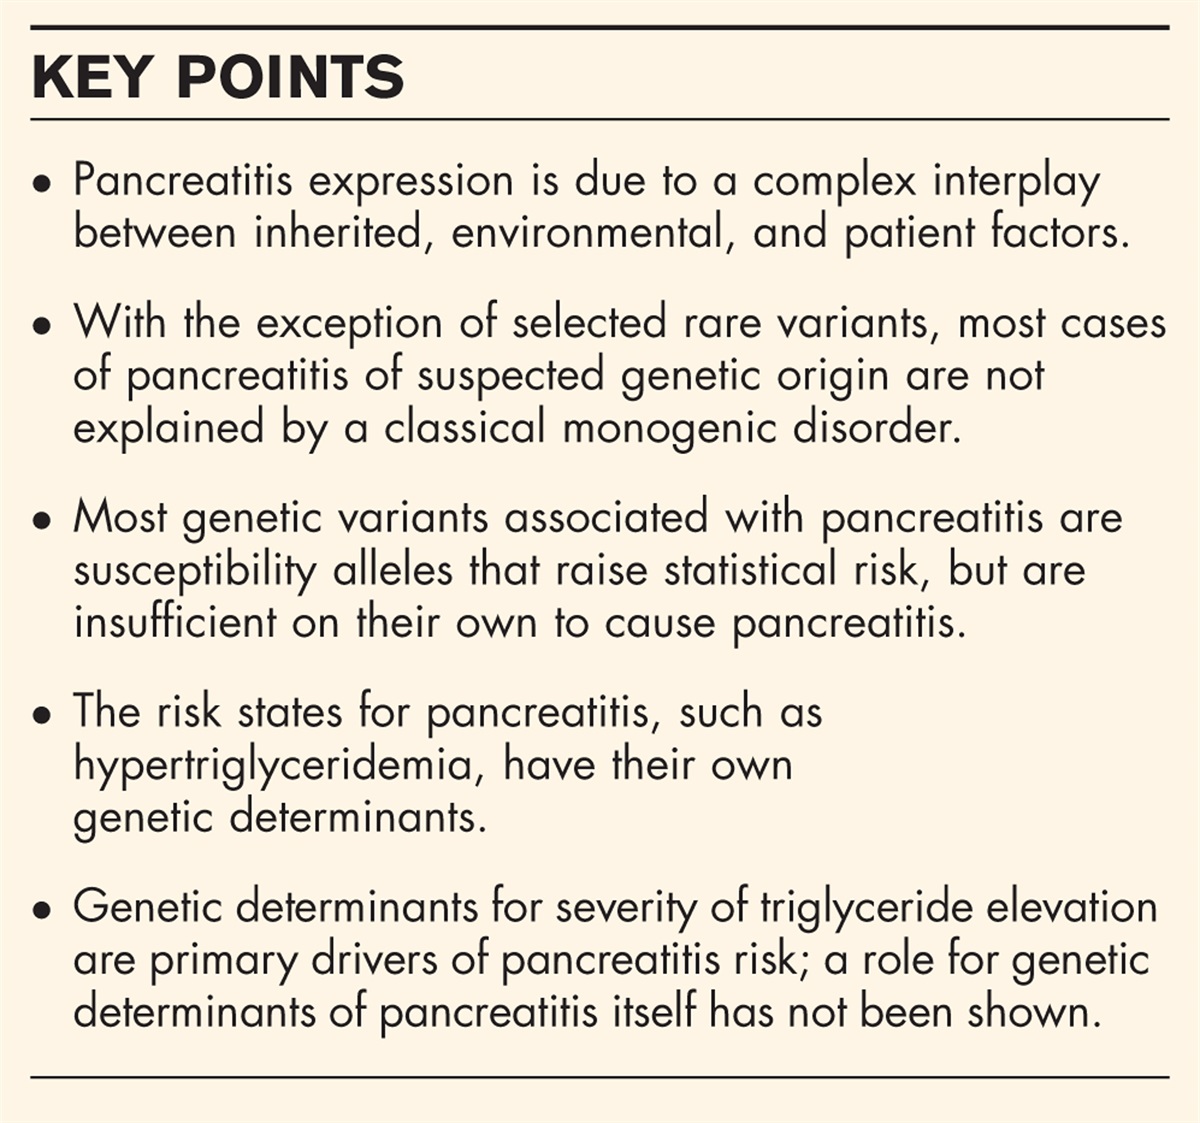 Genetic determinants of pancreatitis: relevance in severe hypertriglyceridemia